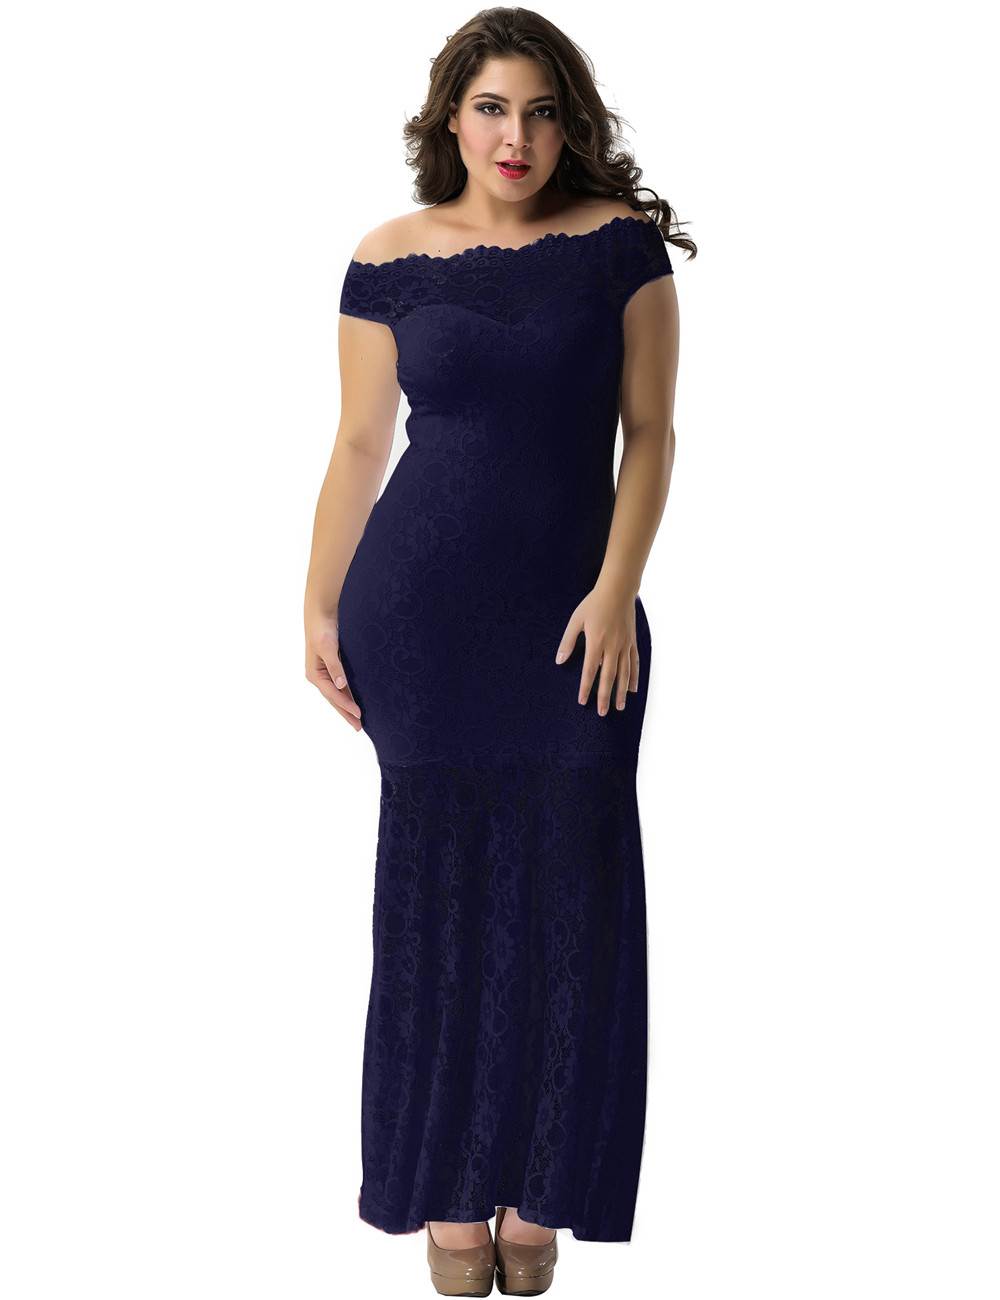 Plus Size Dark Blue Lace Elegant Party Gown | Ohyeahlady